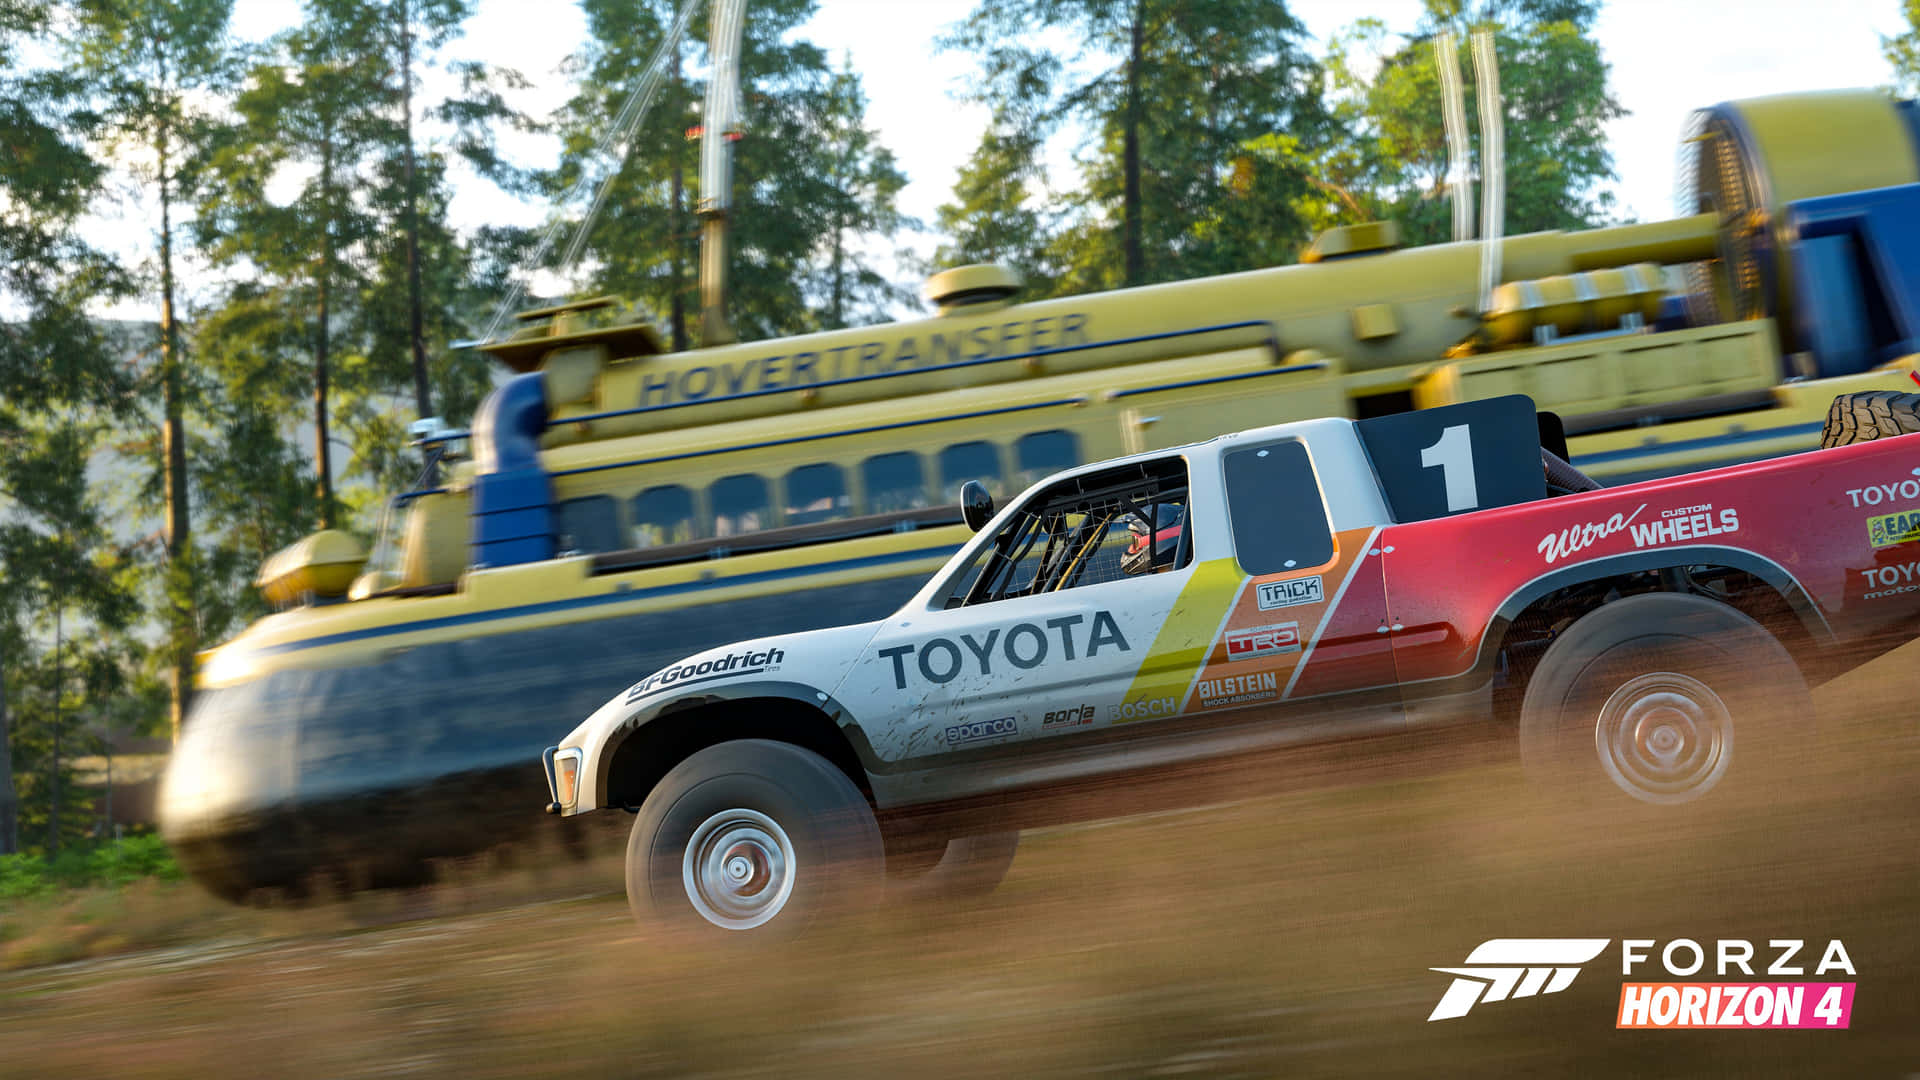 4k Forza Horizon 4 Background Truck Racing A Train